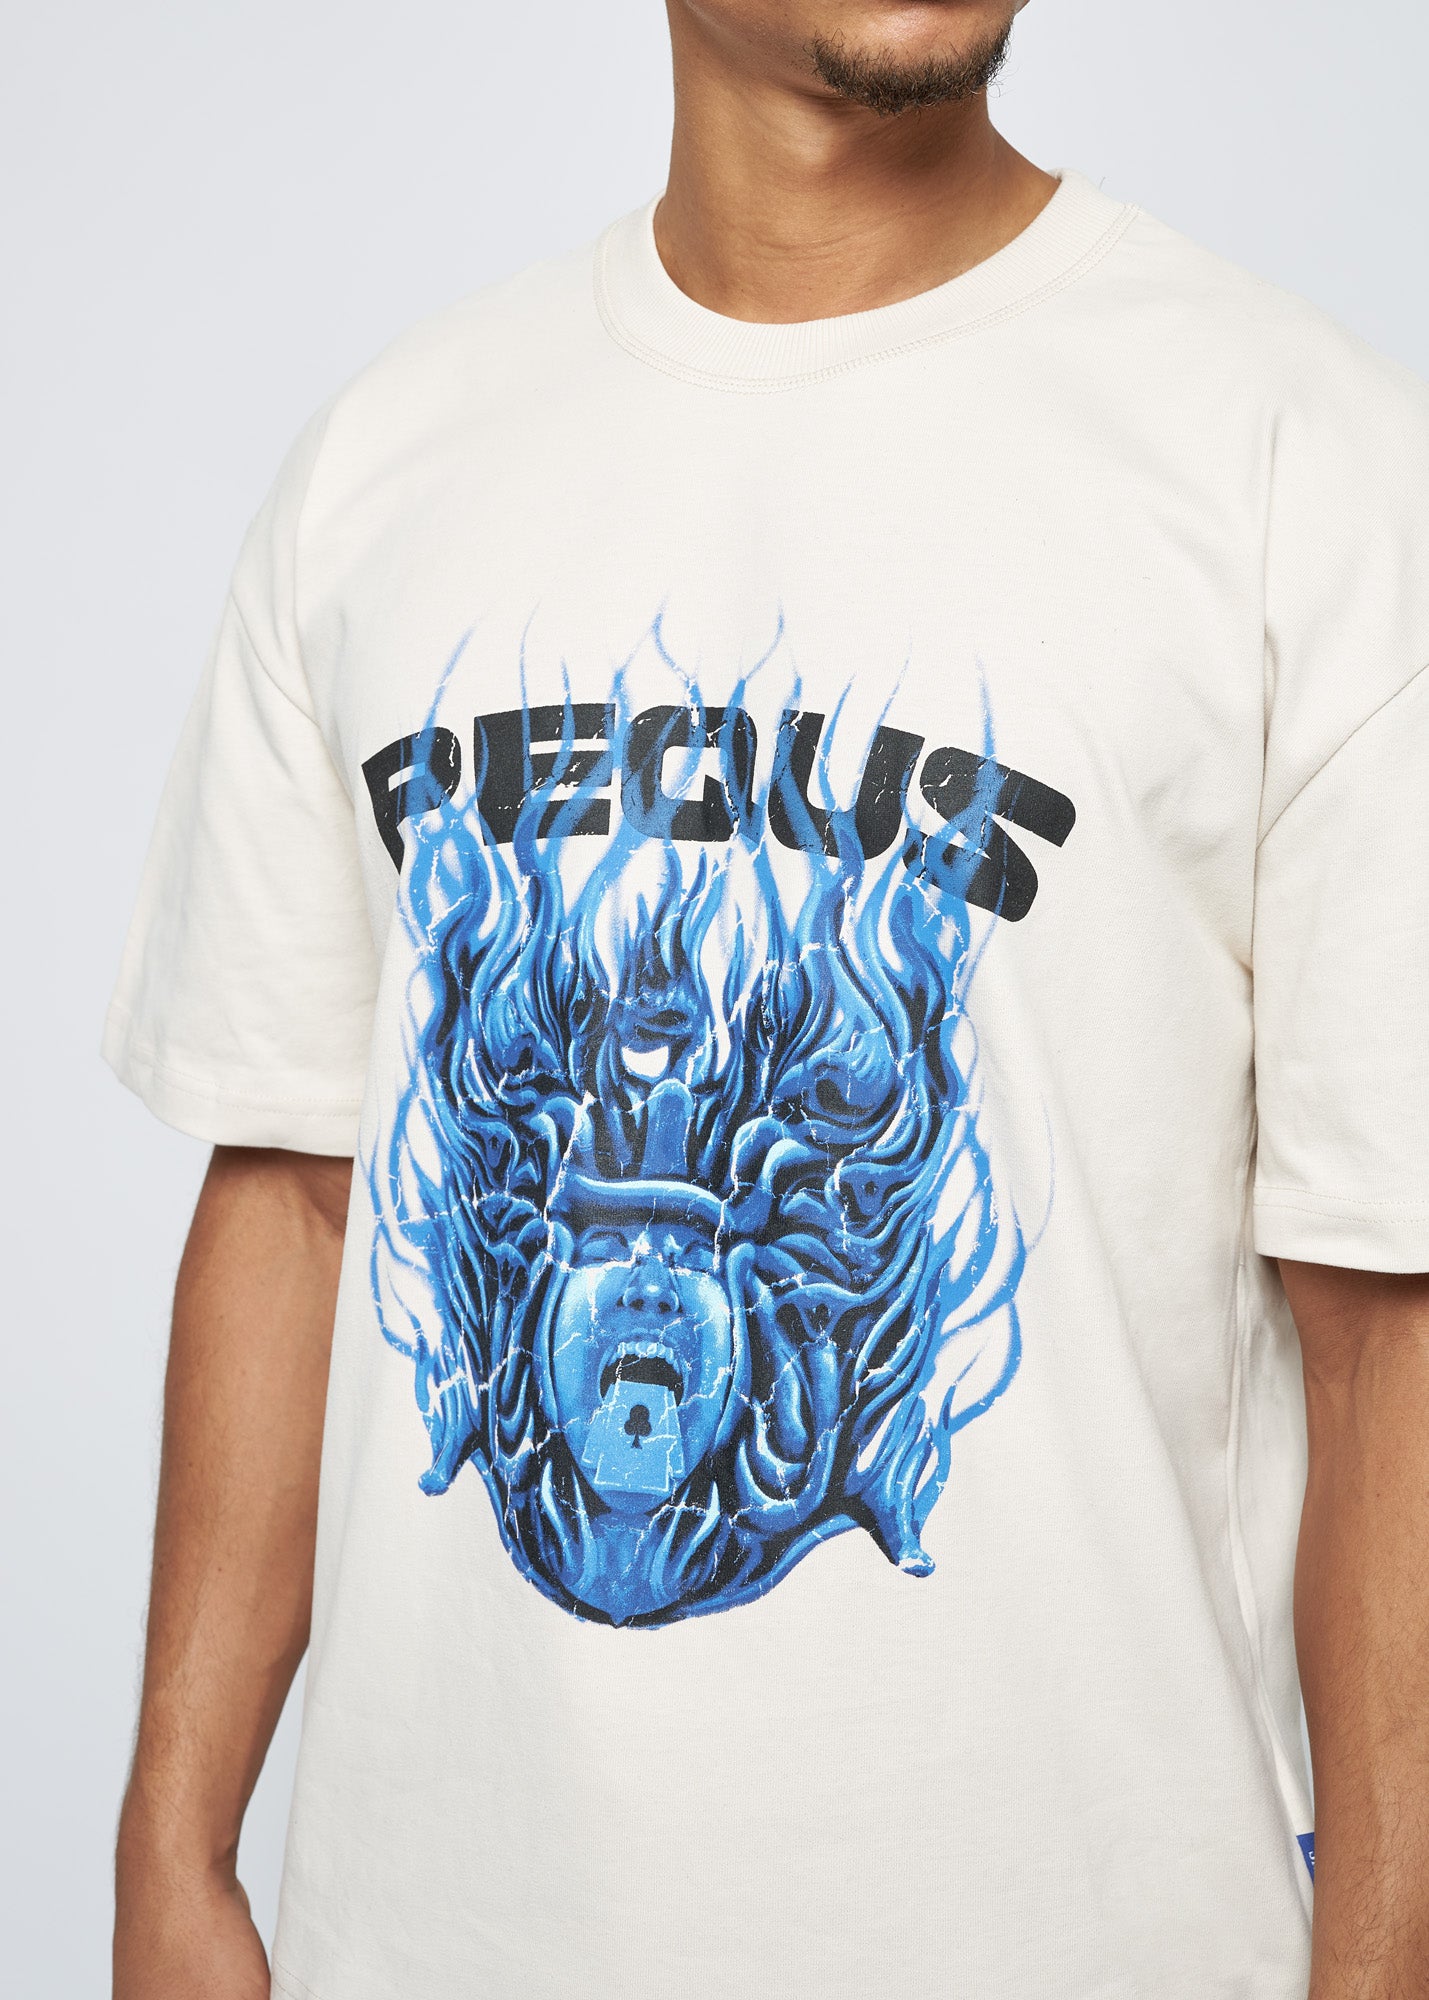 Medusa Graphic Shirt